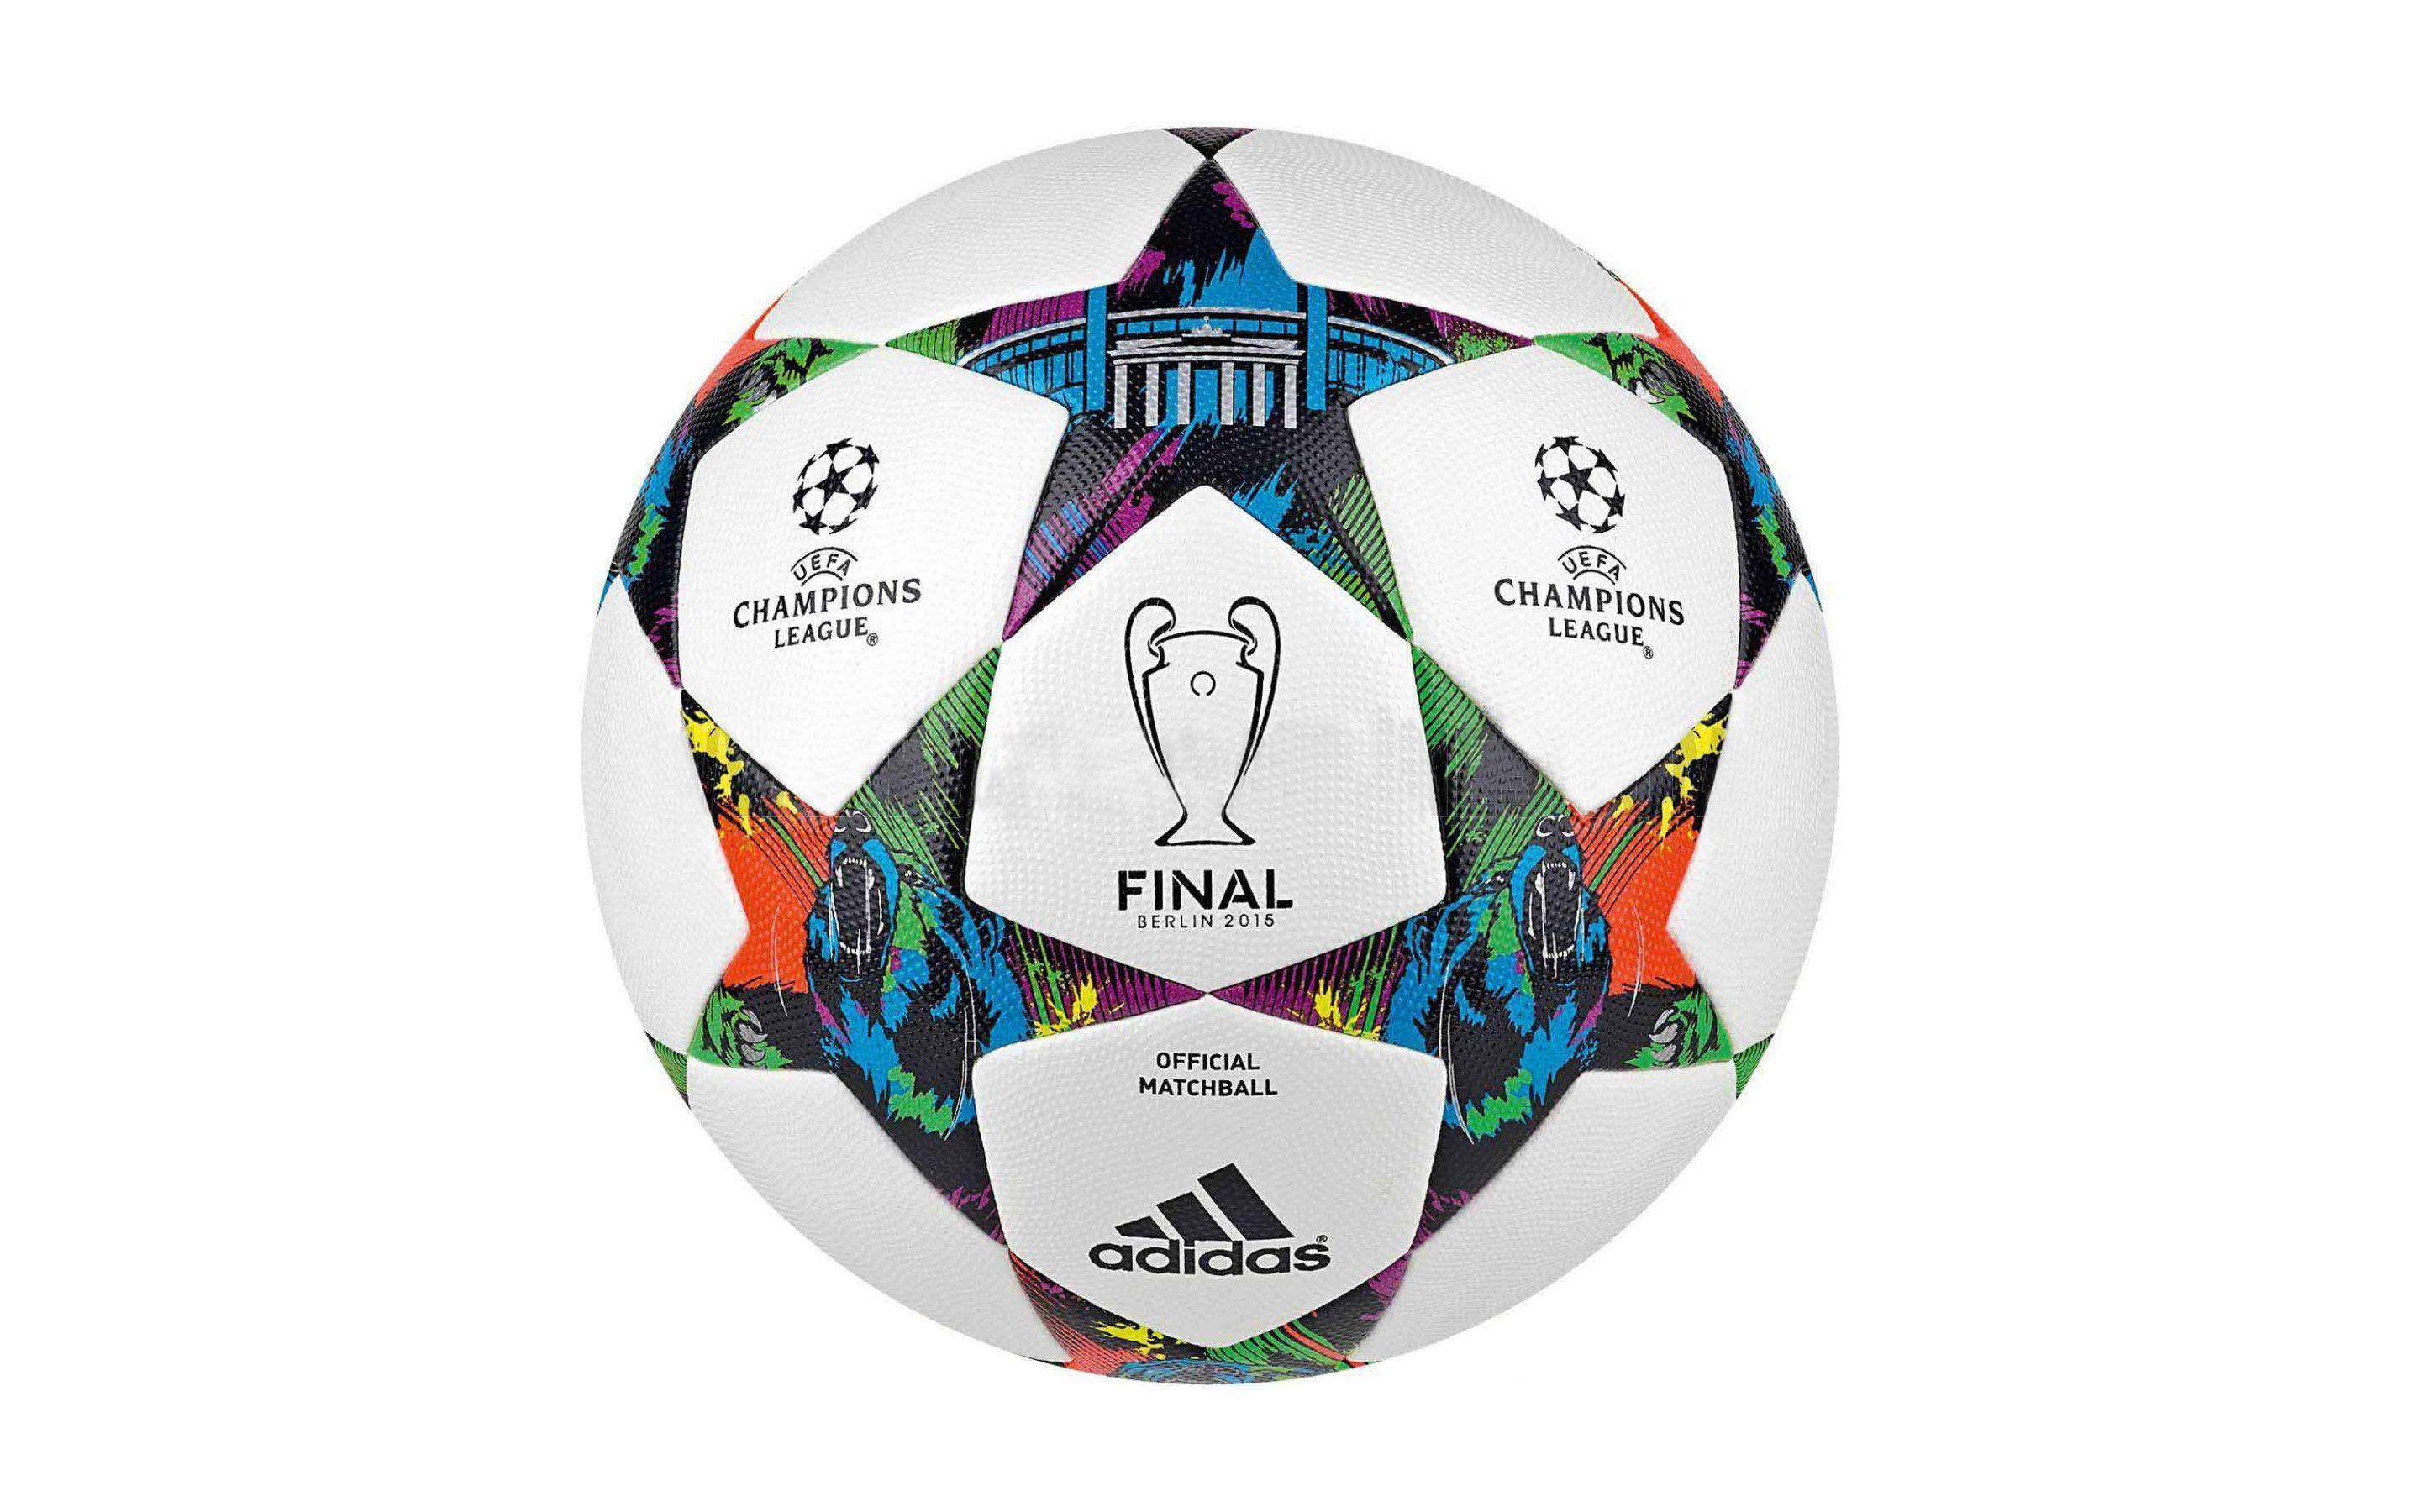 Adidas Finale Berlin 2015 Champions League Ball Wallpaper Wide or